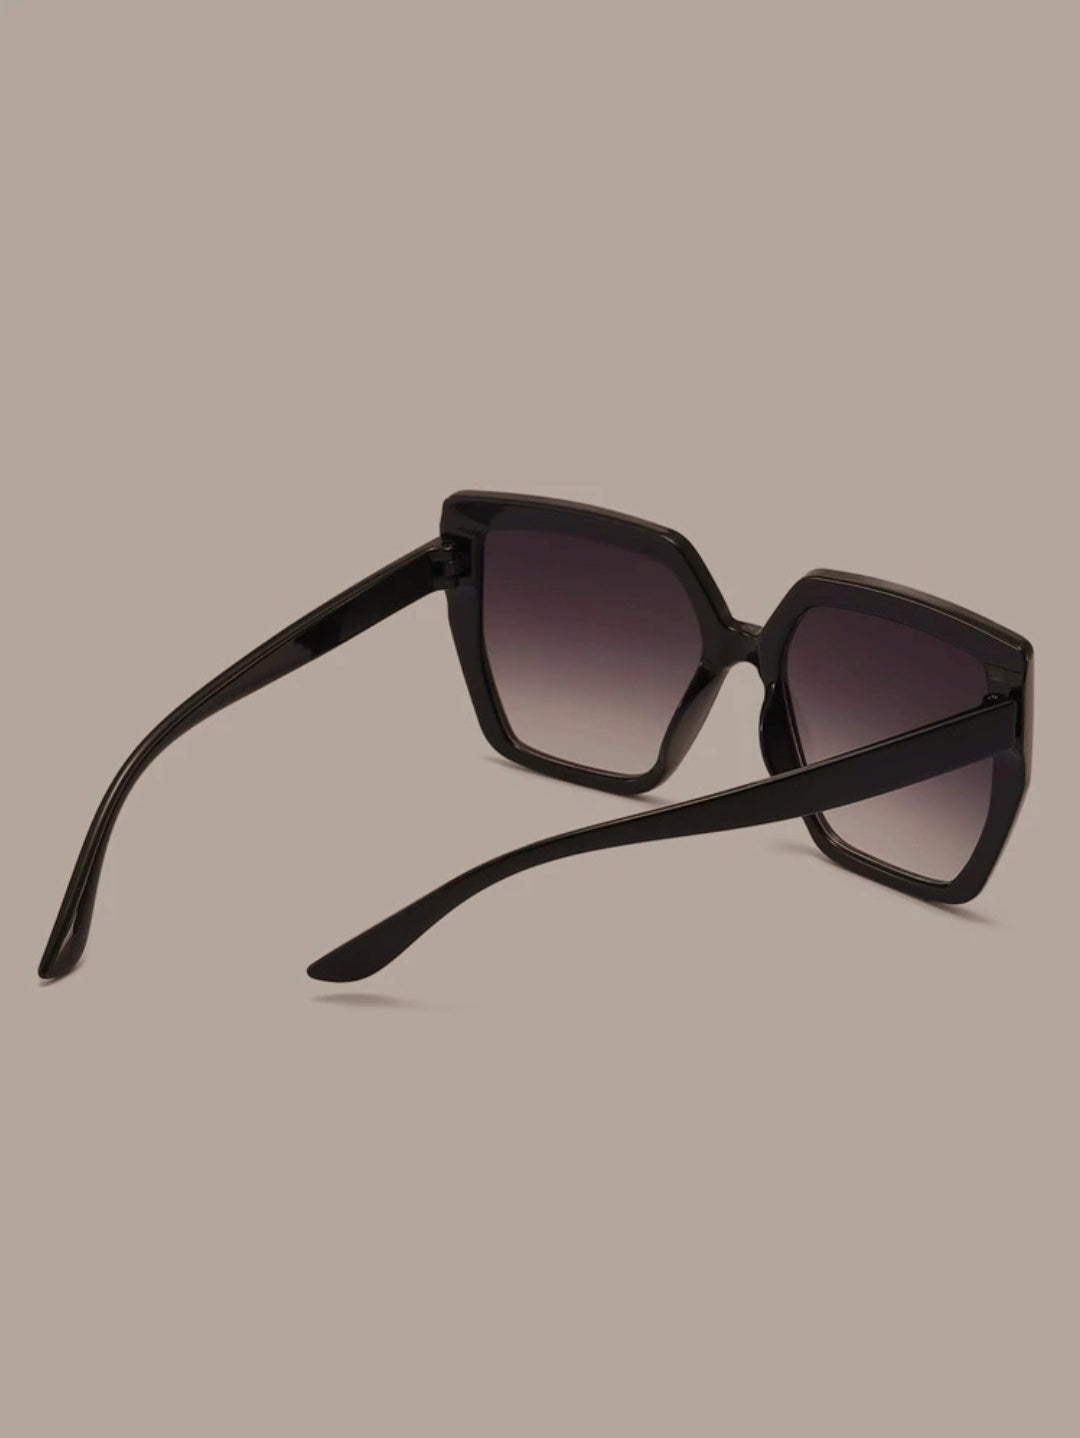 The Skeen Sunglasses